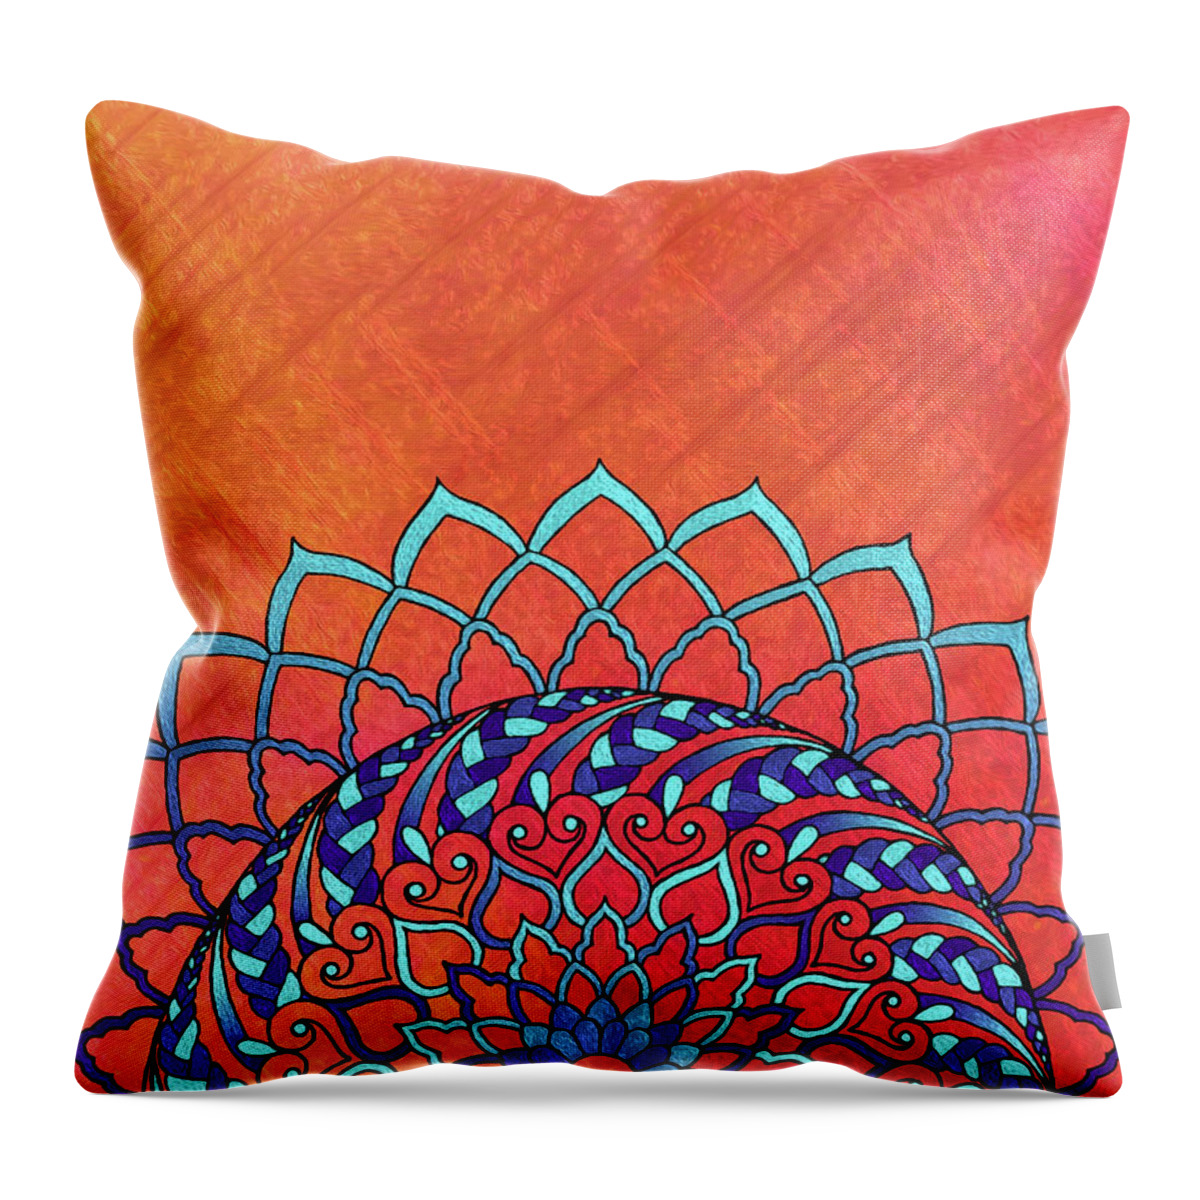 Mandala Throw Pillow featuring the digital art Braided Hearts Mandala by Mary J Winters-Meyer